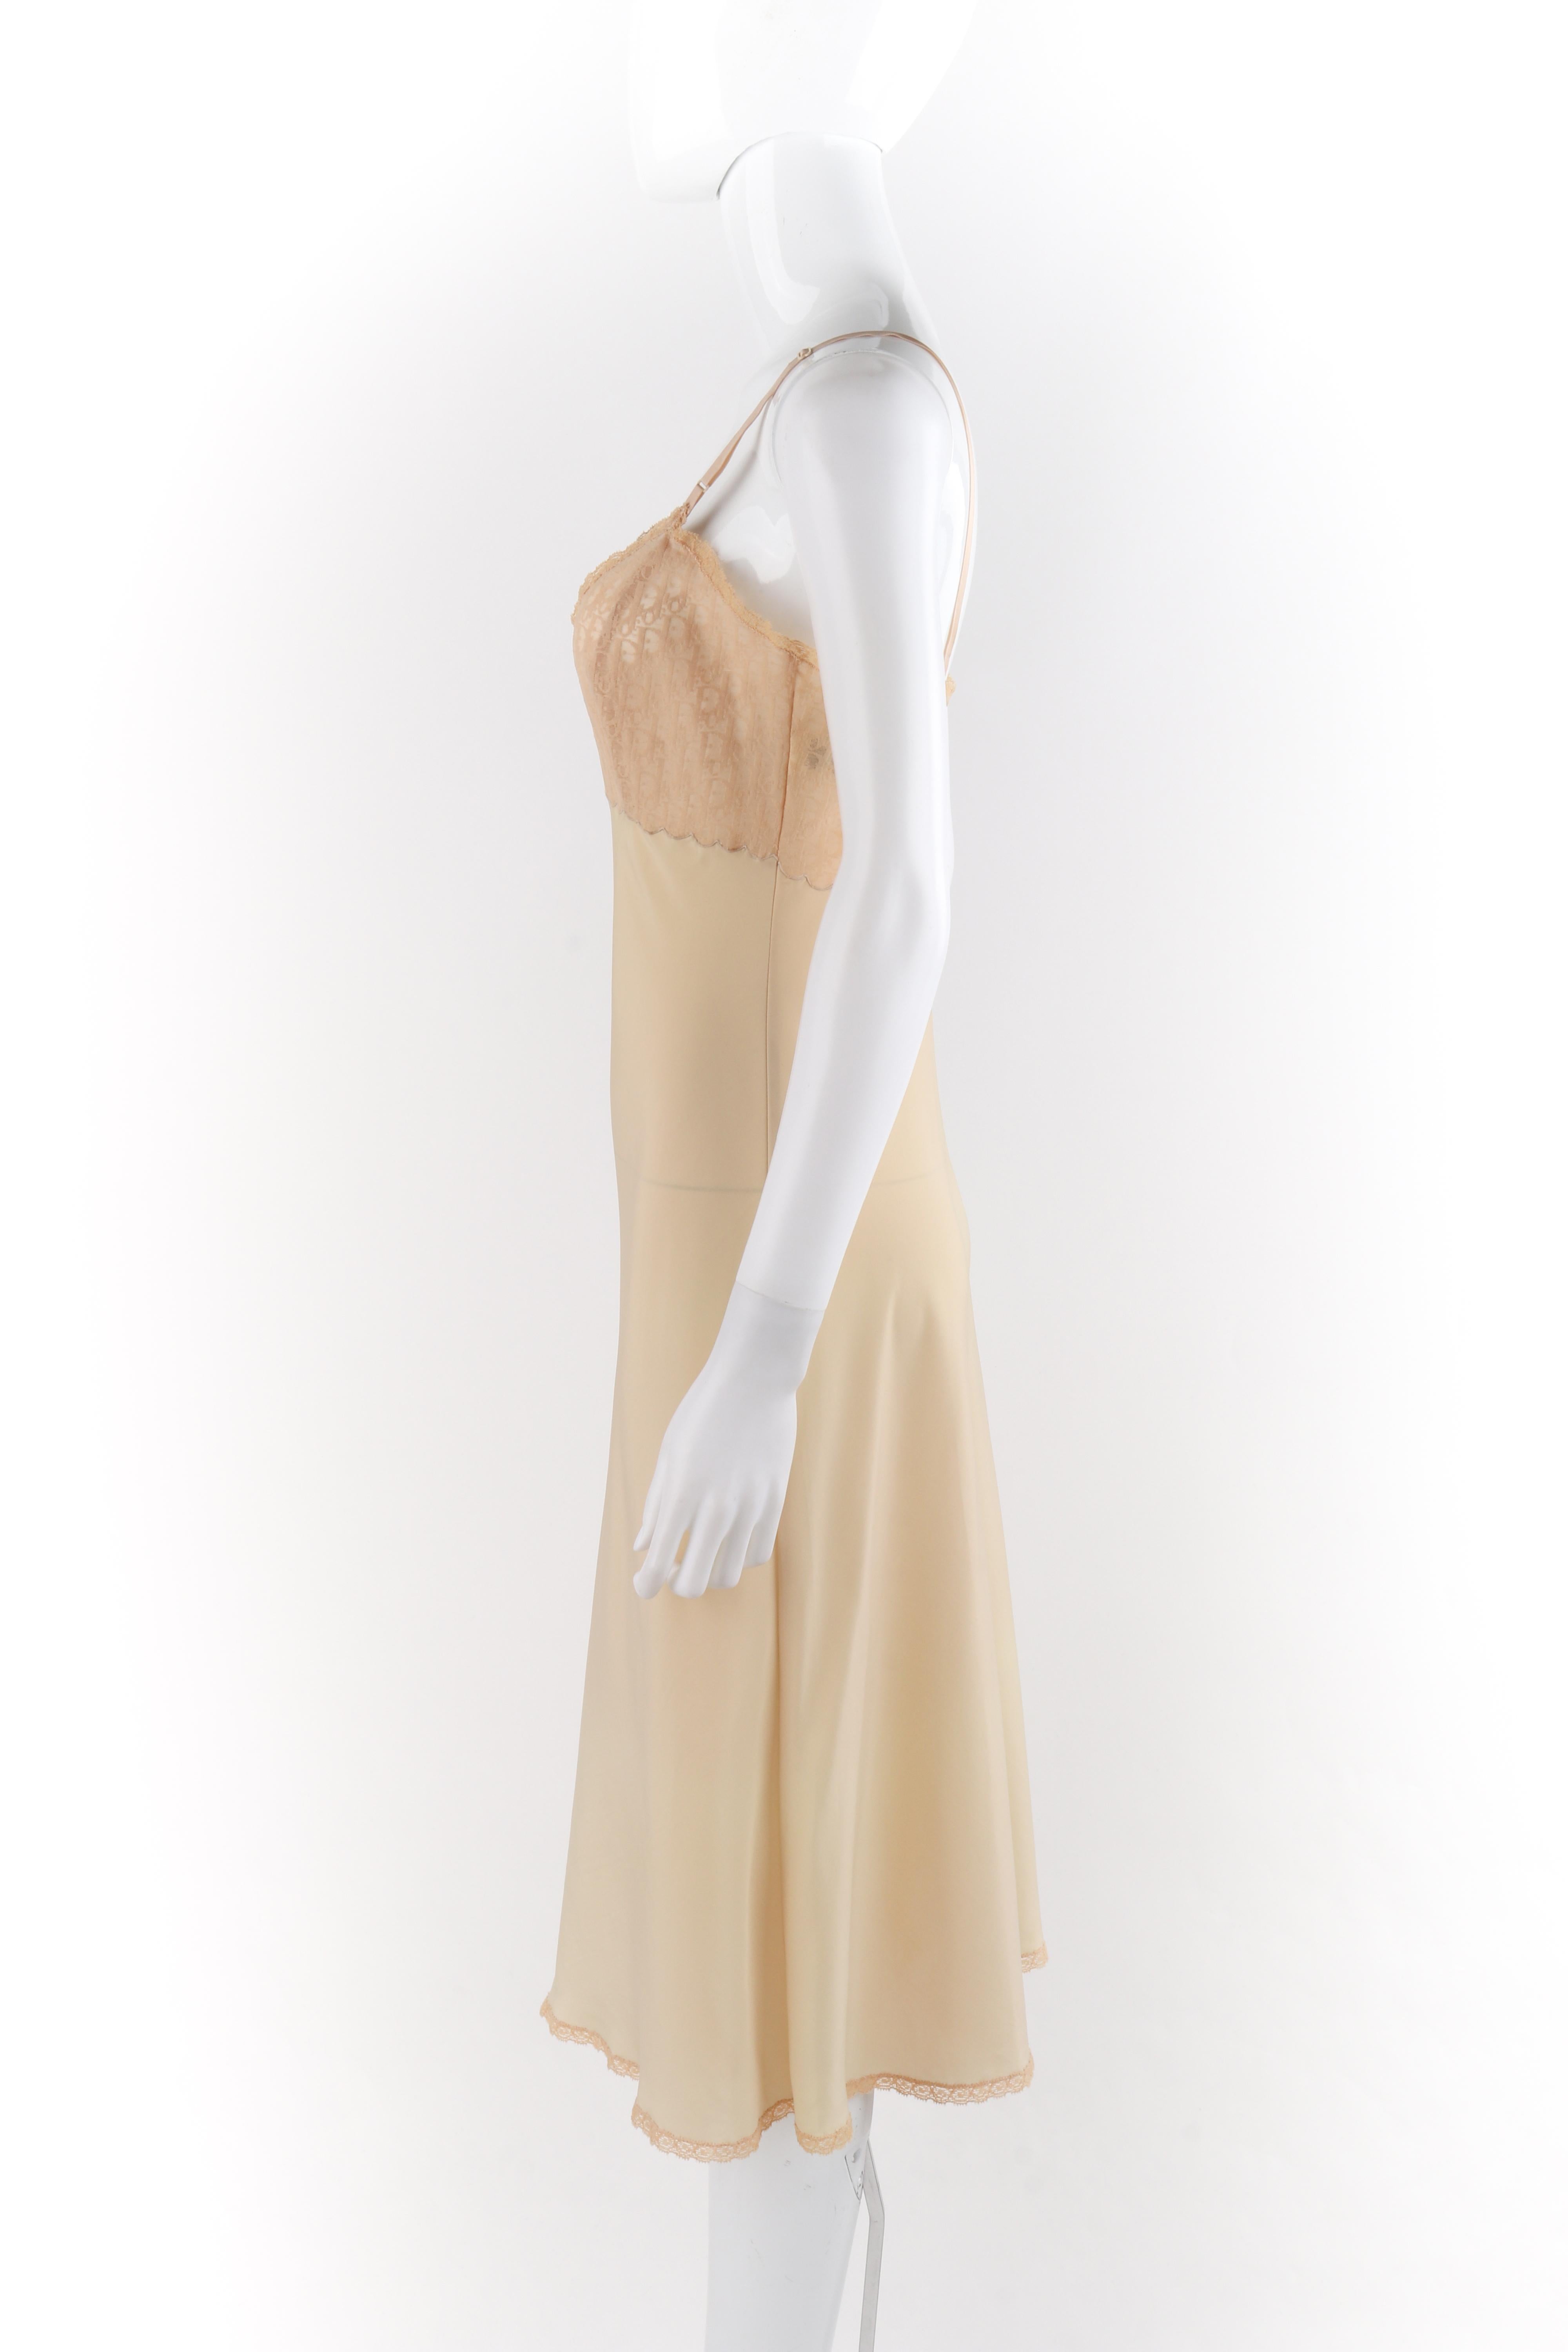 Beige CHRISTIAN DIOR c.1970’s Nude Semi Sheer Signature Print Mesh Lace Slip Dress